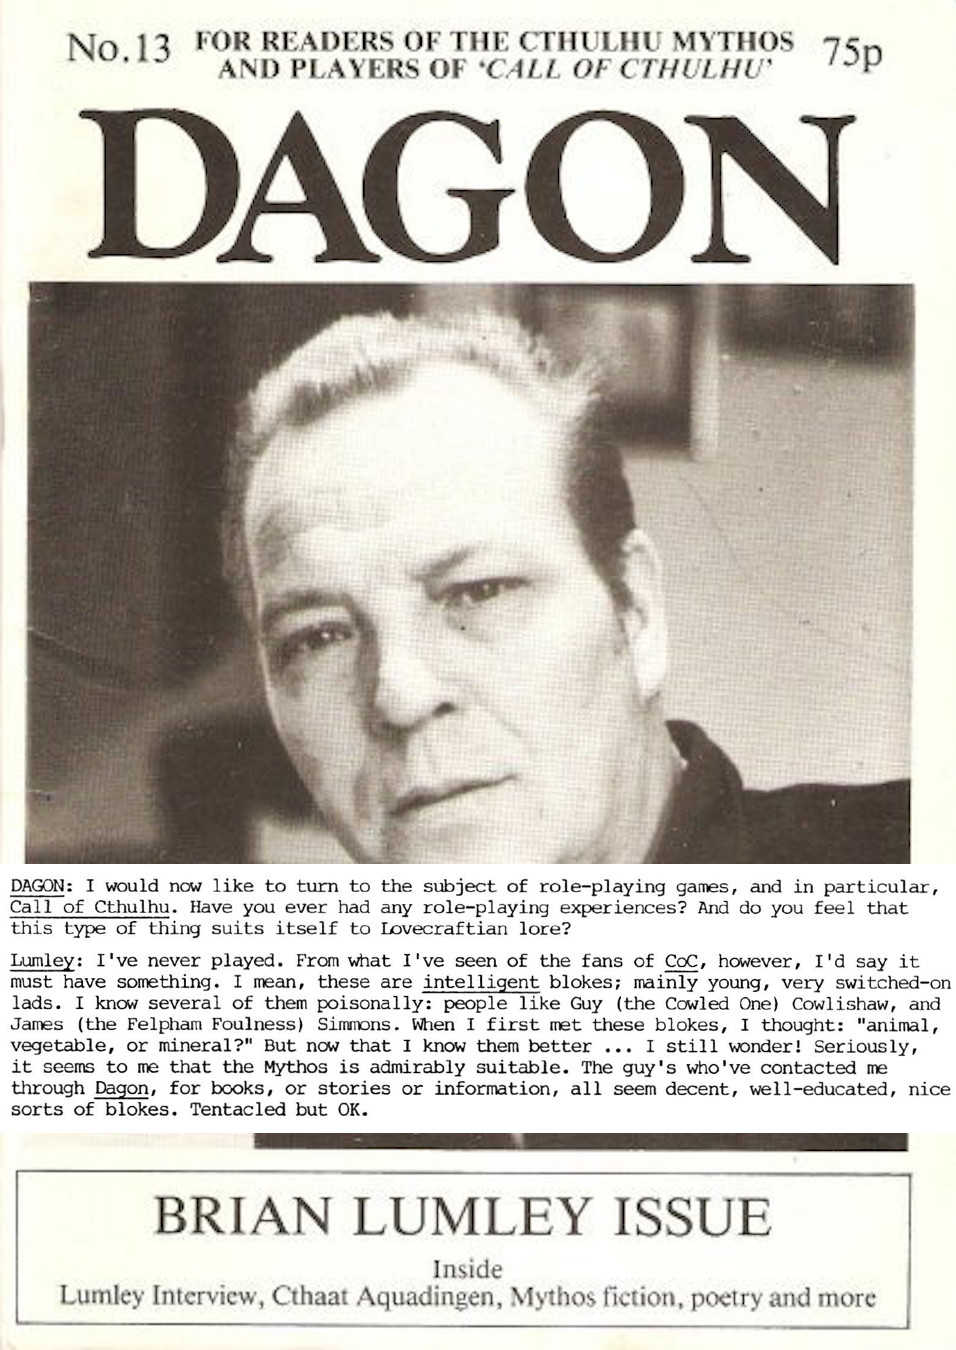 Dagon #13 - the Brian Lumley issue